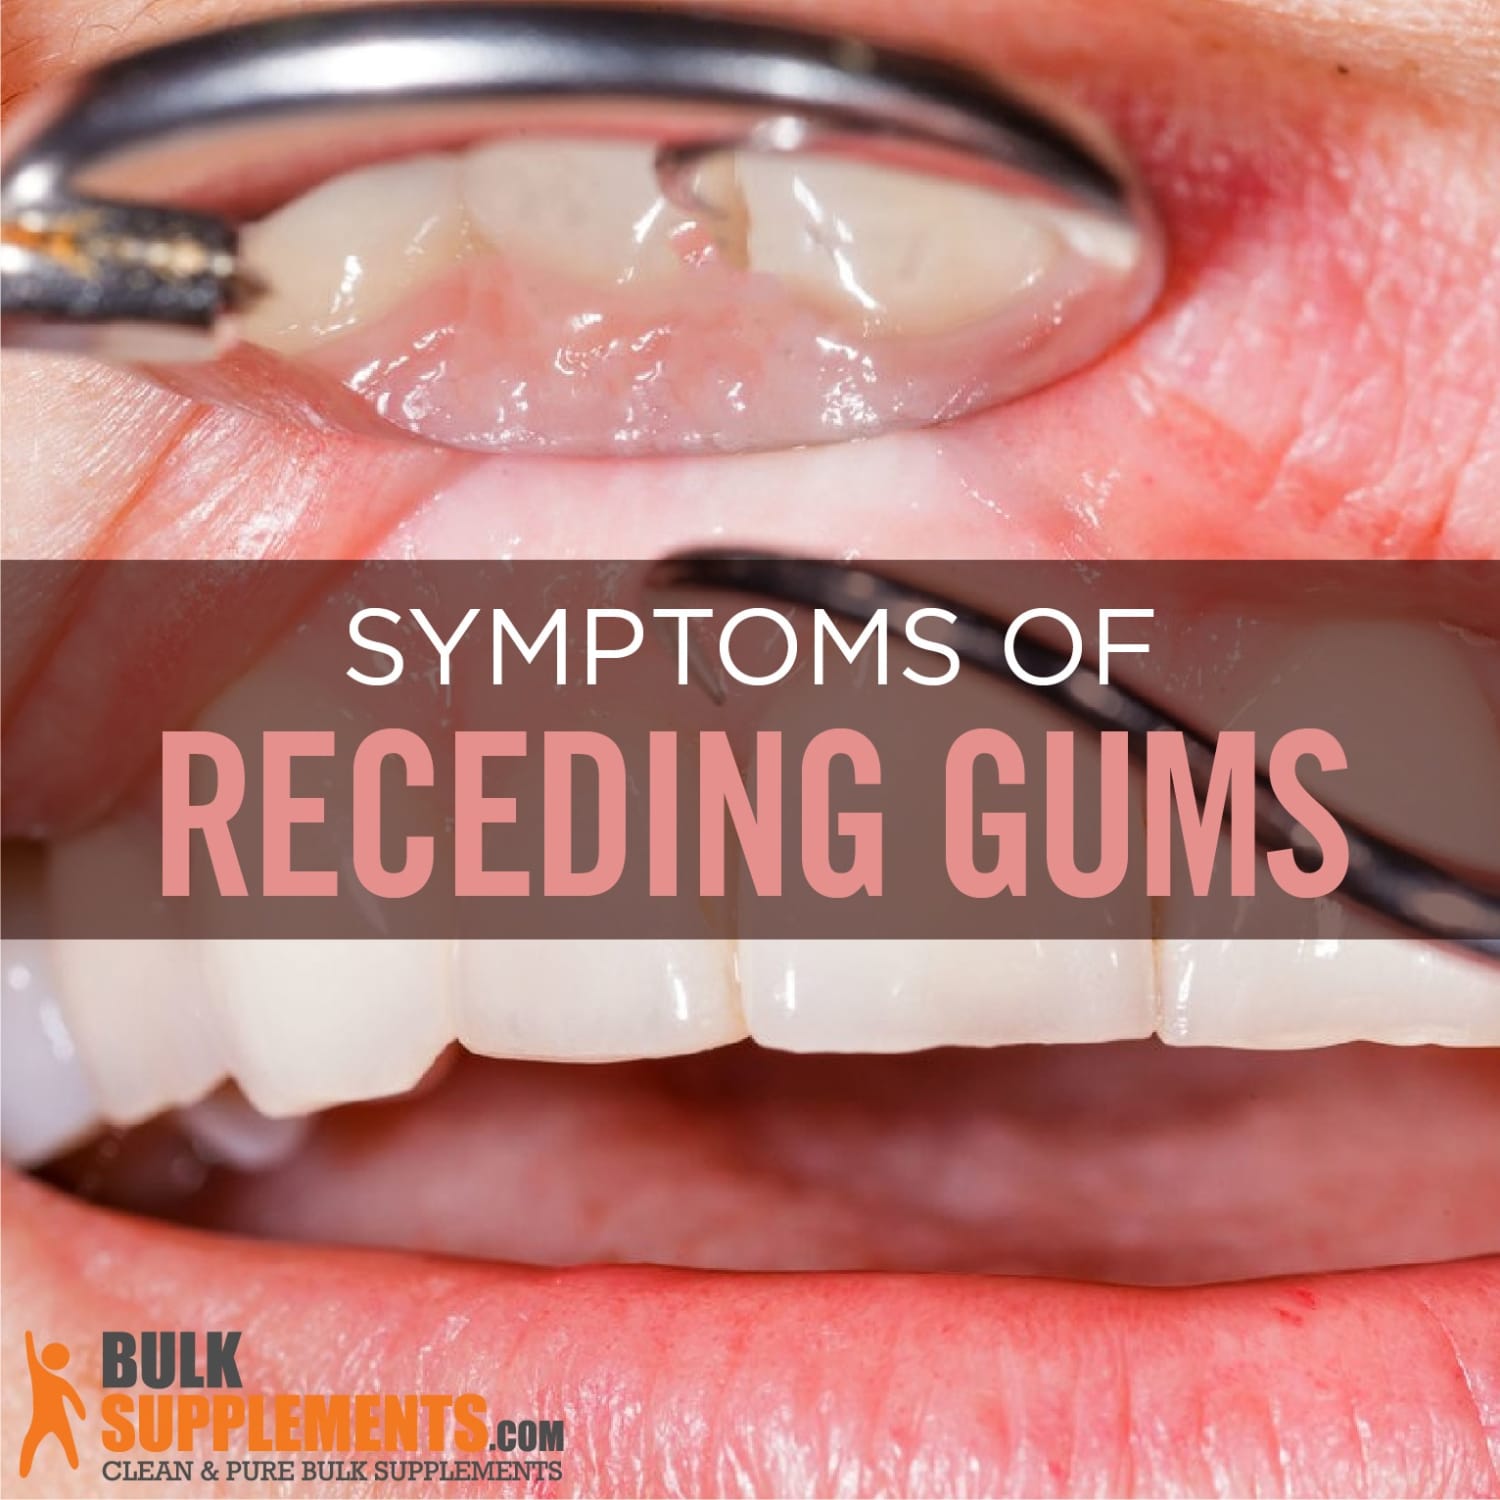 Receding Gums: Symptoms, Causes & Treatment